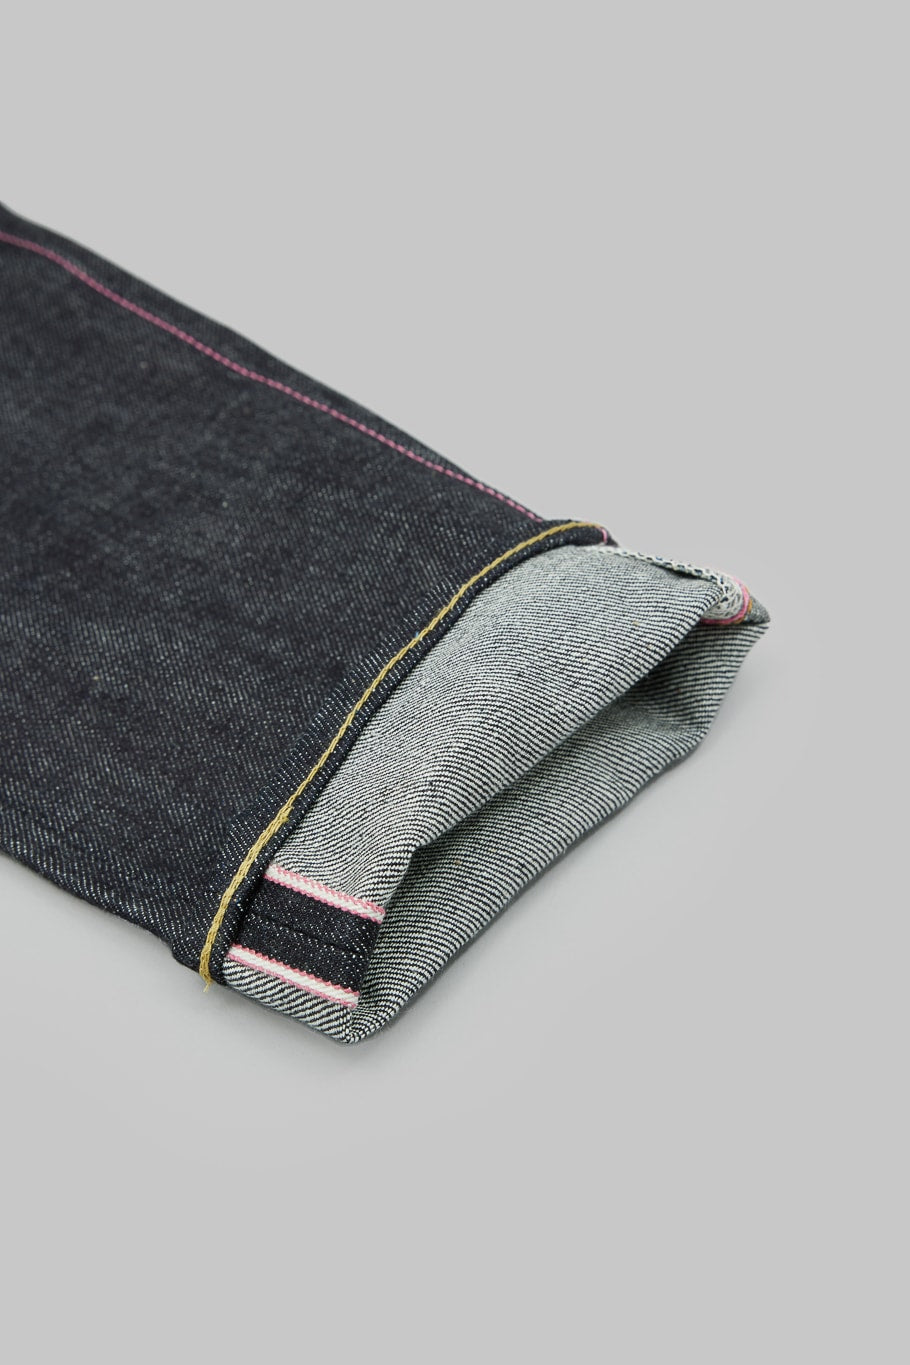 momotaro jeans 0405 v selvedge denim high tapered pink selvedge